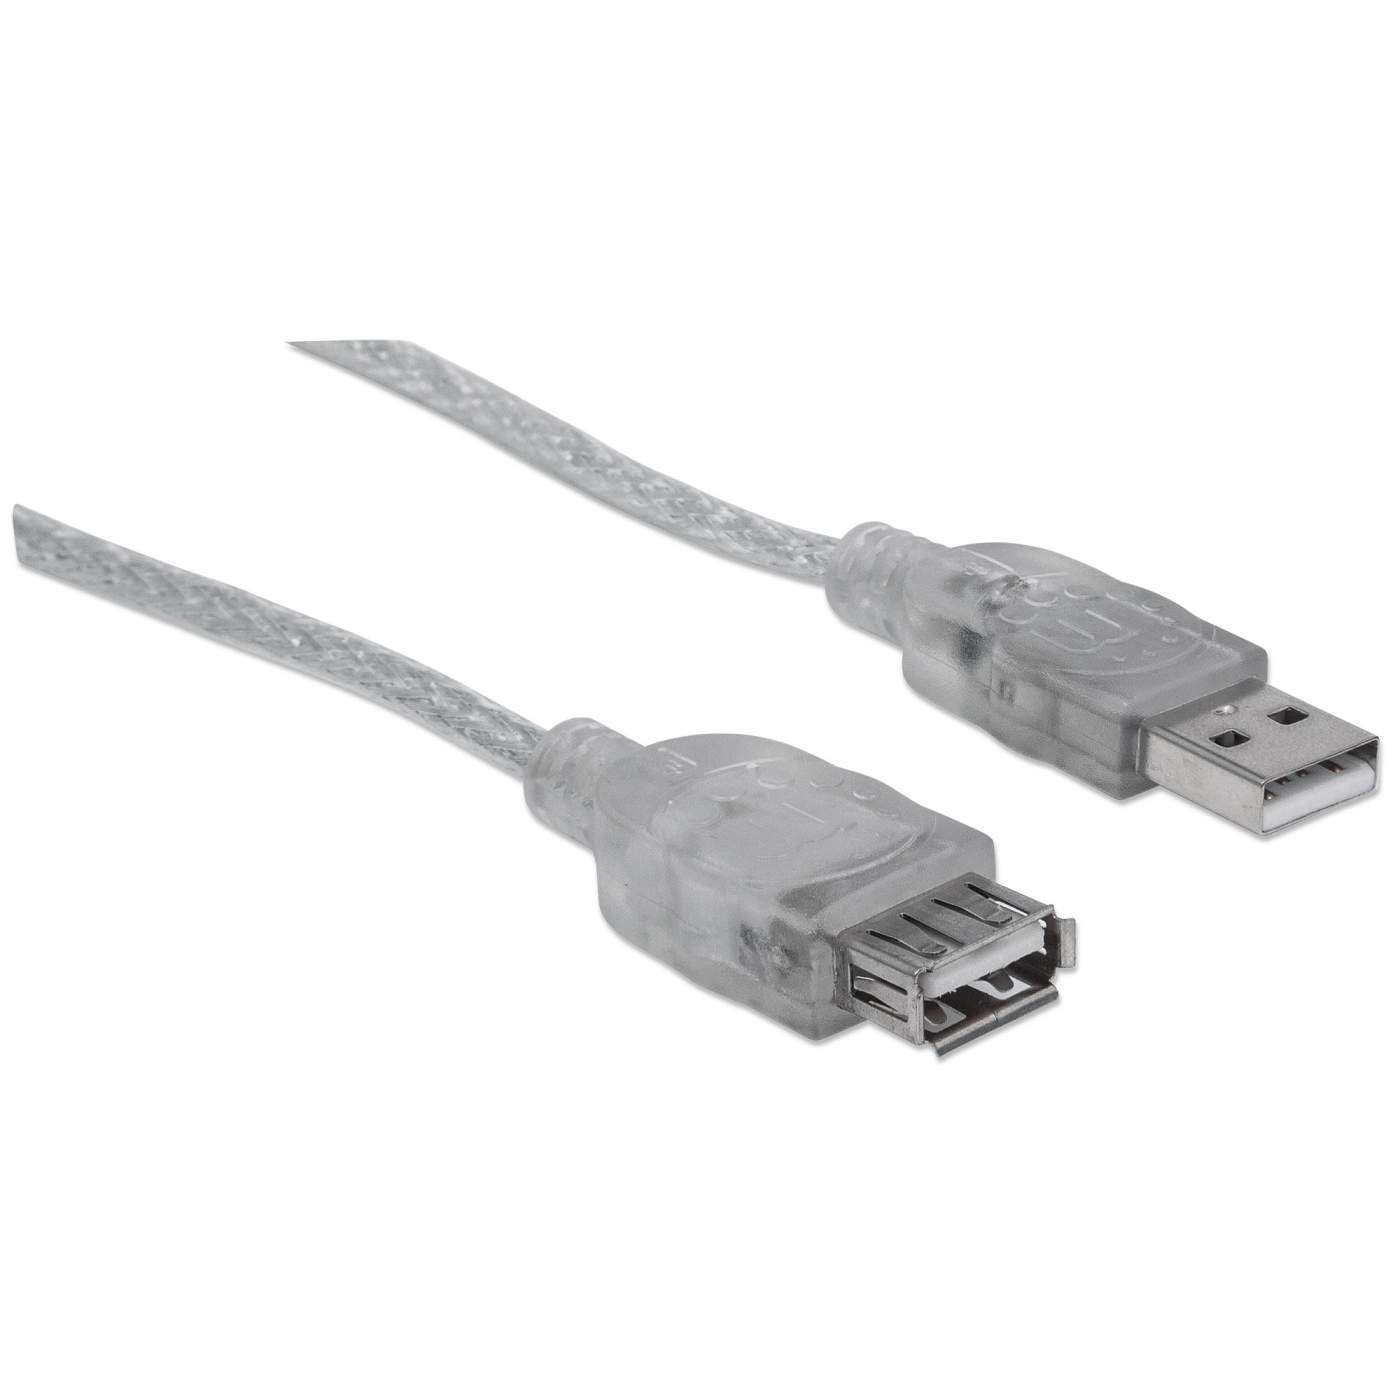 Cable USB a micro USB - USB-345/G - MaxiTec